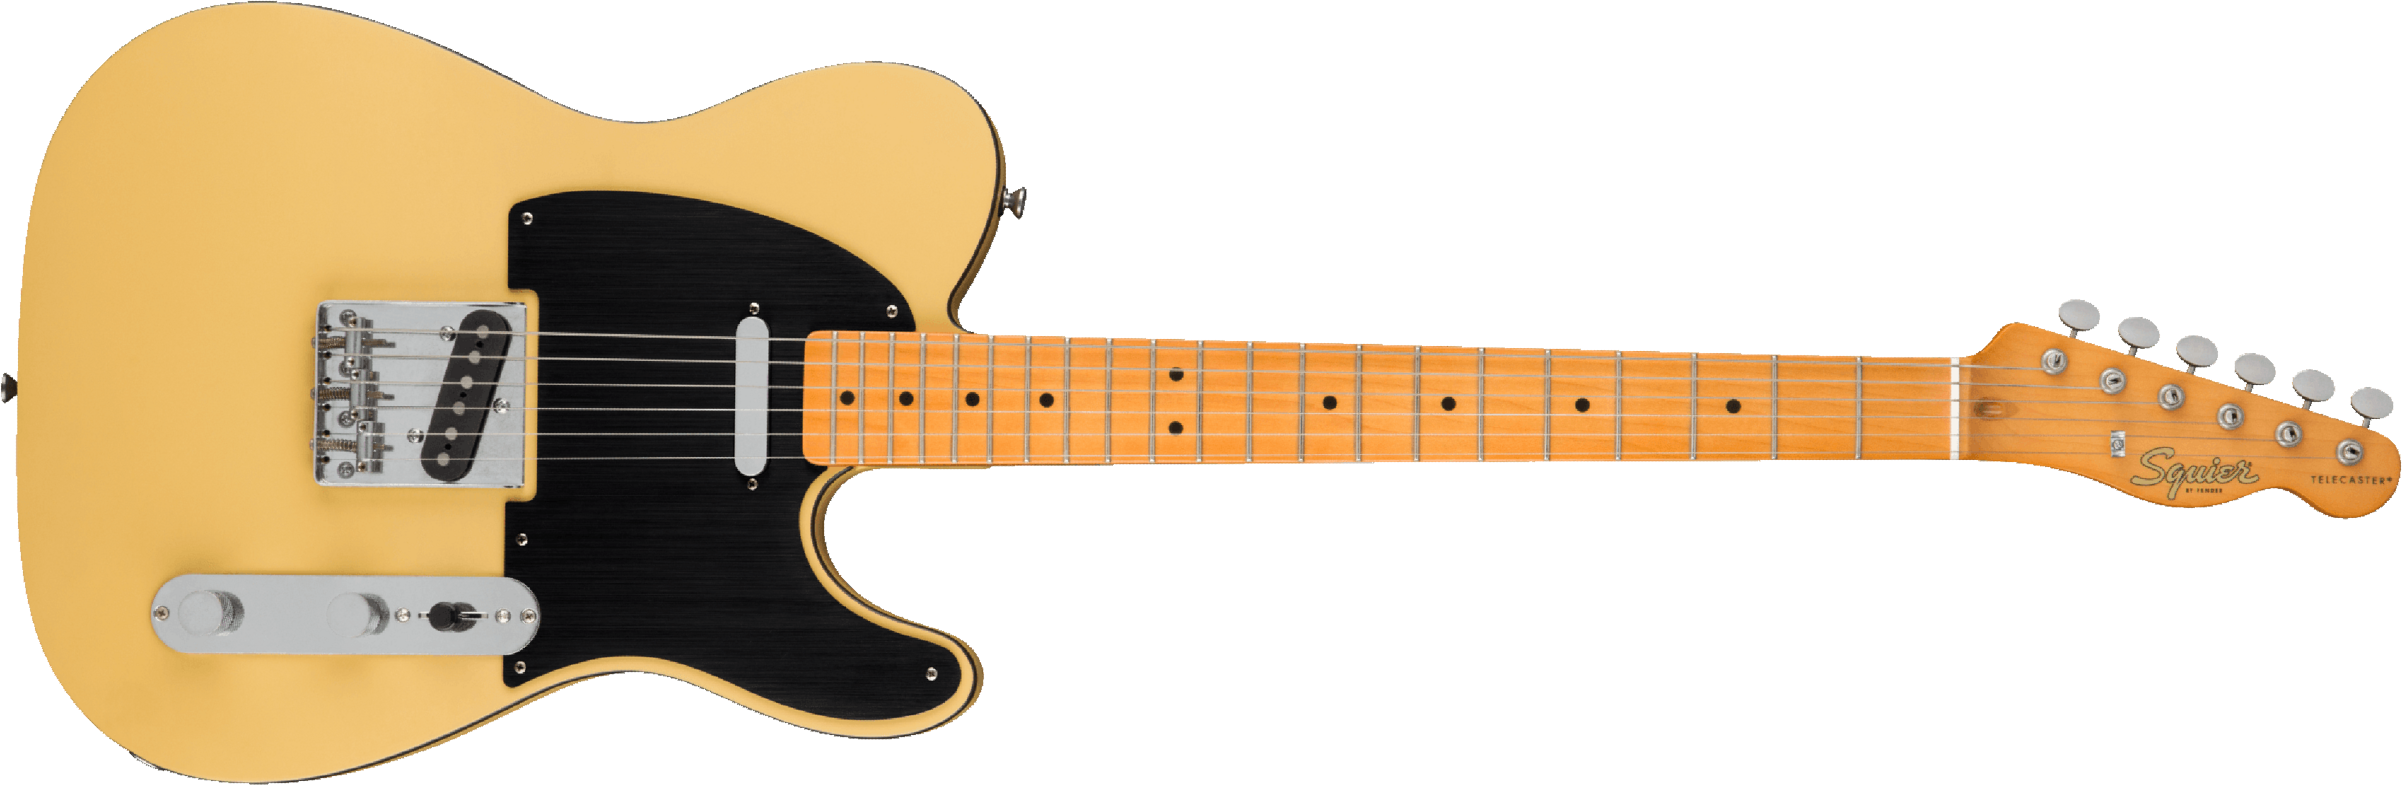 Squier Tele 40th Anniversary Vintage Edition Mn - Satin Vintage Blonde - Tel shape electric guitar - Main picture